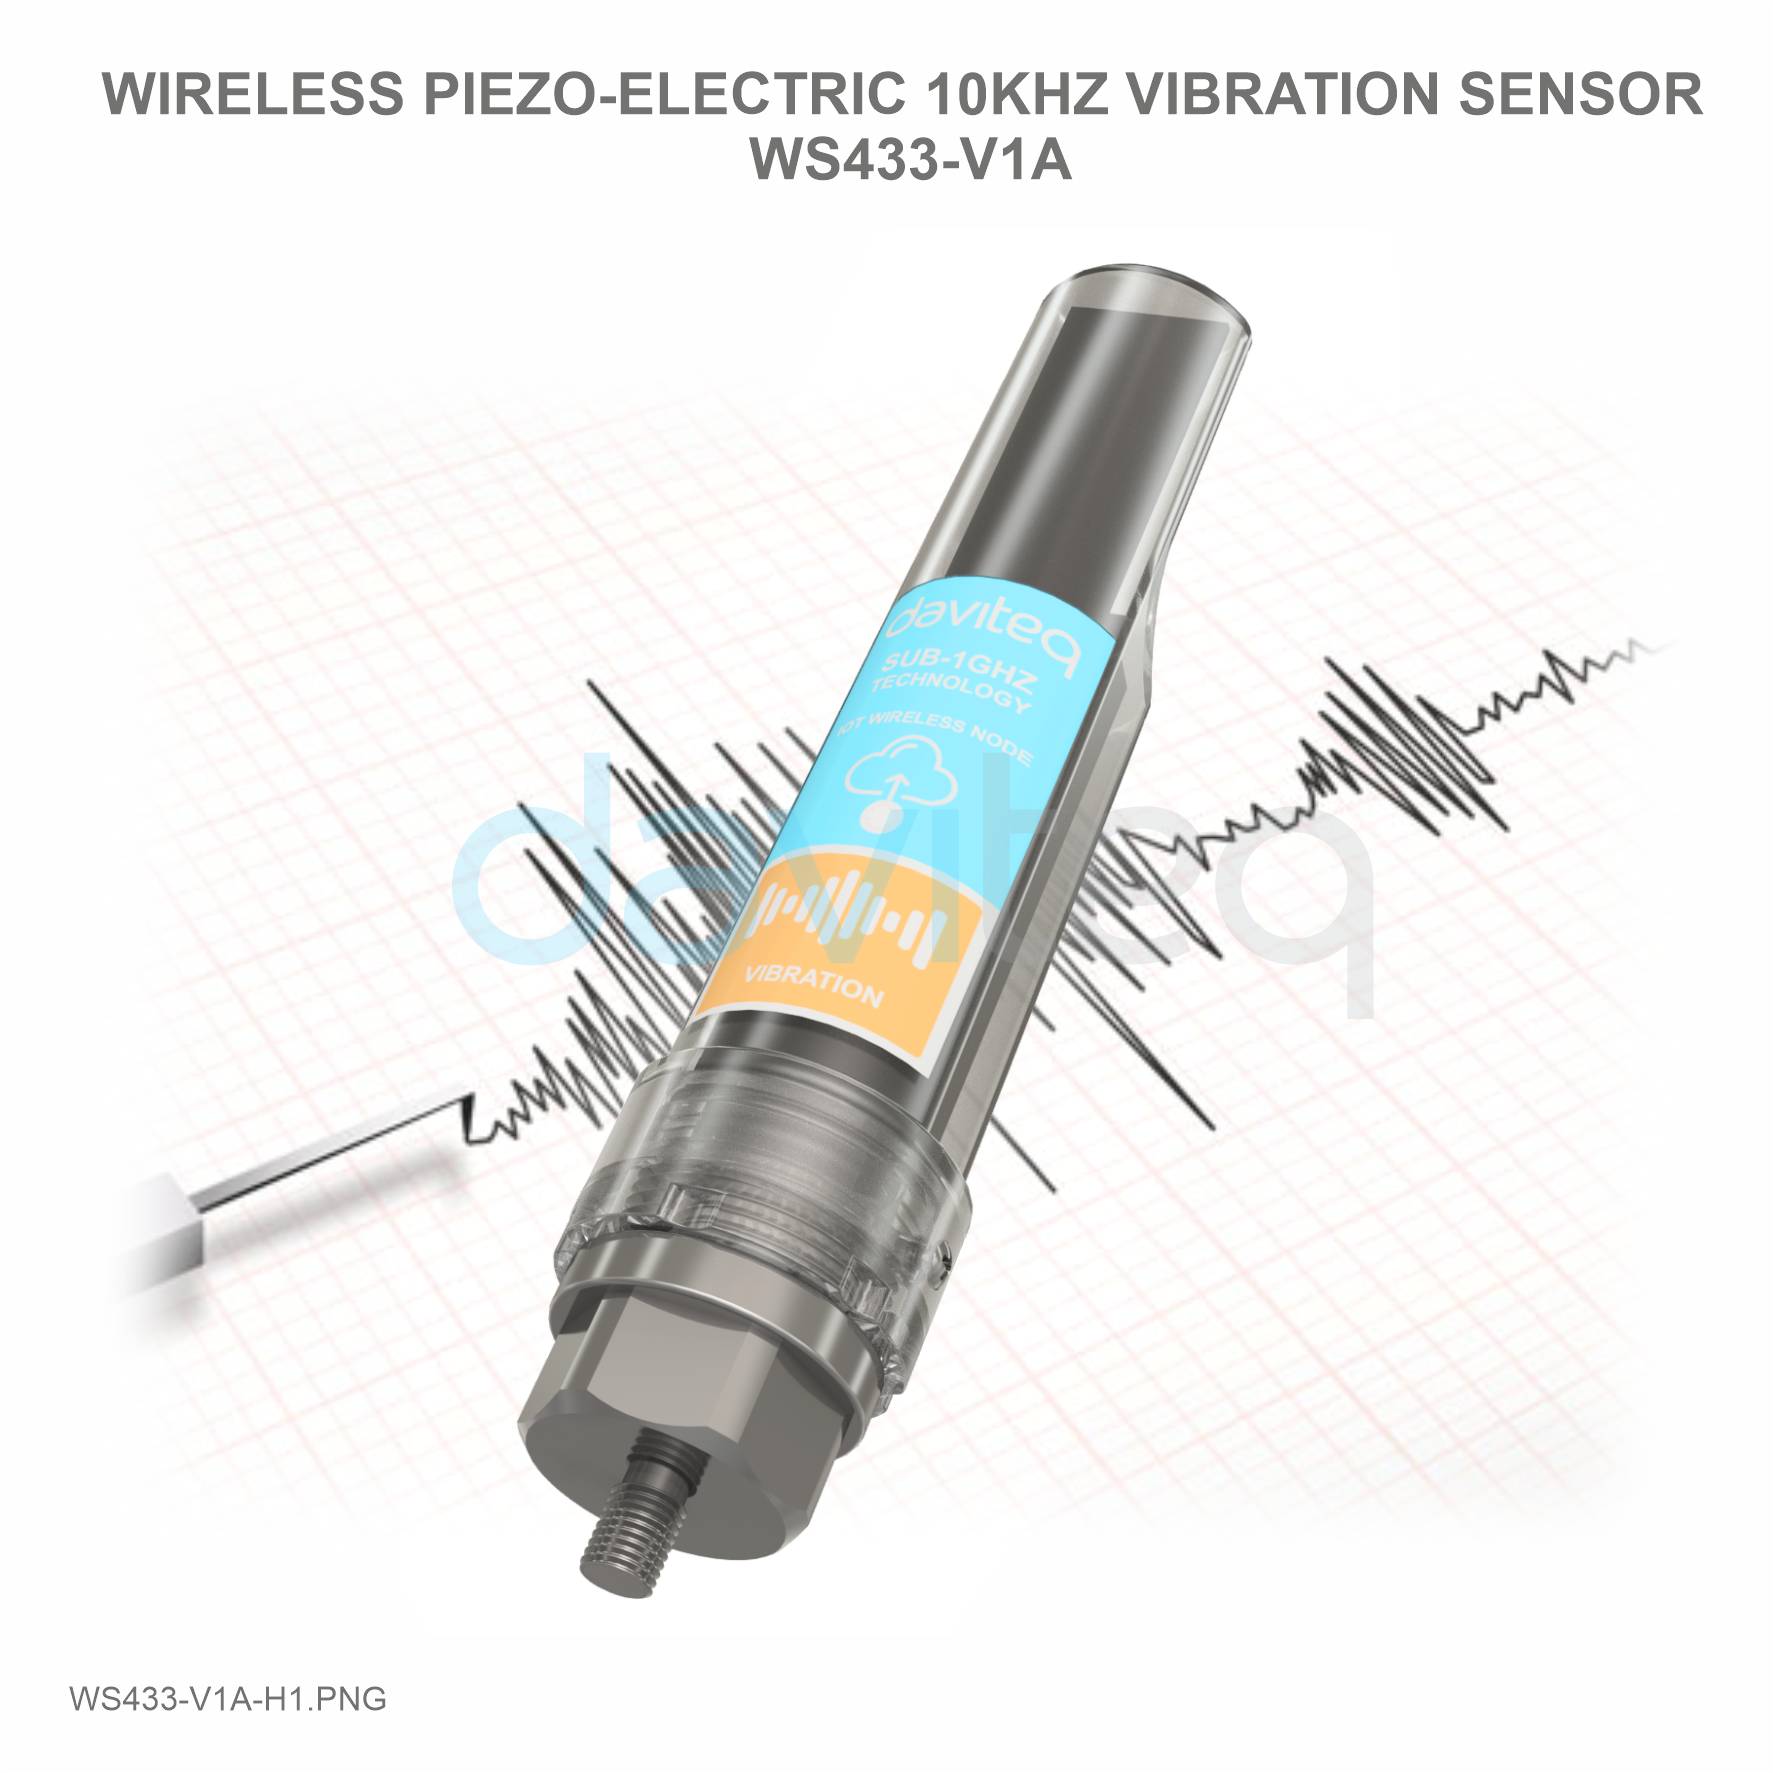 Wireless Piezo-Electric 10khz Vibration Sensor